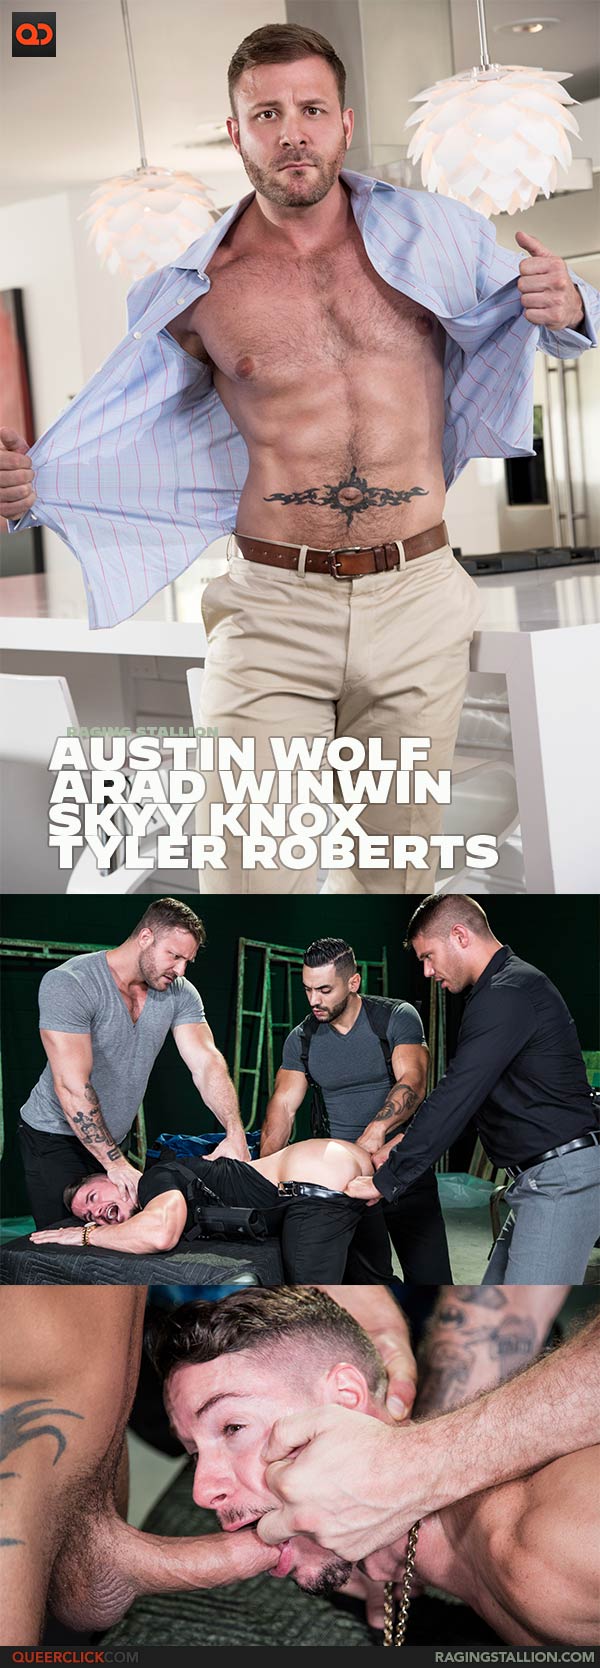 Raging Stallion: Austin Wolf, Arad Winwin, Skyy Knox and Tyler Roberts